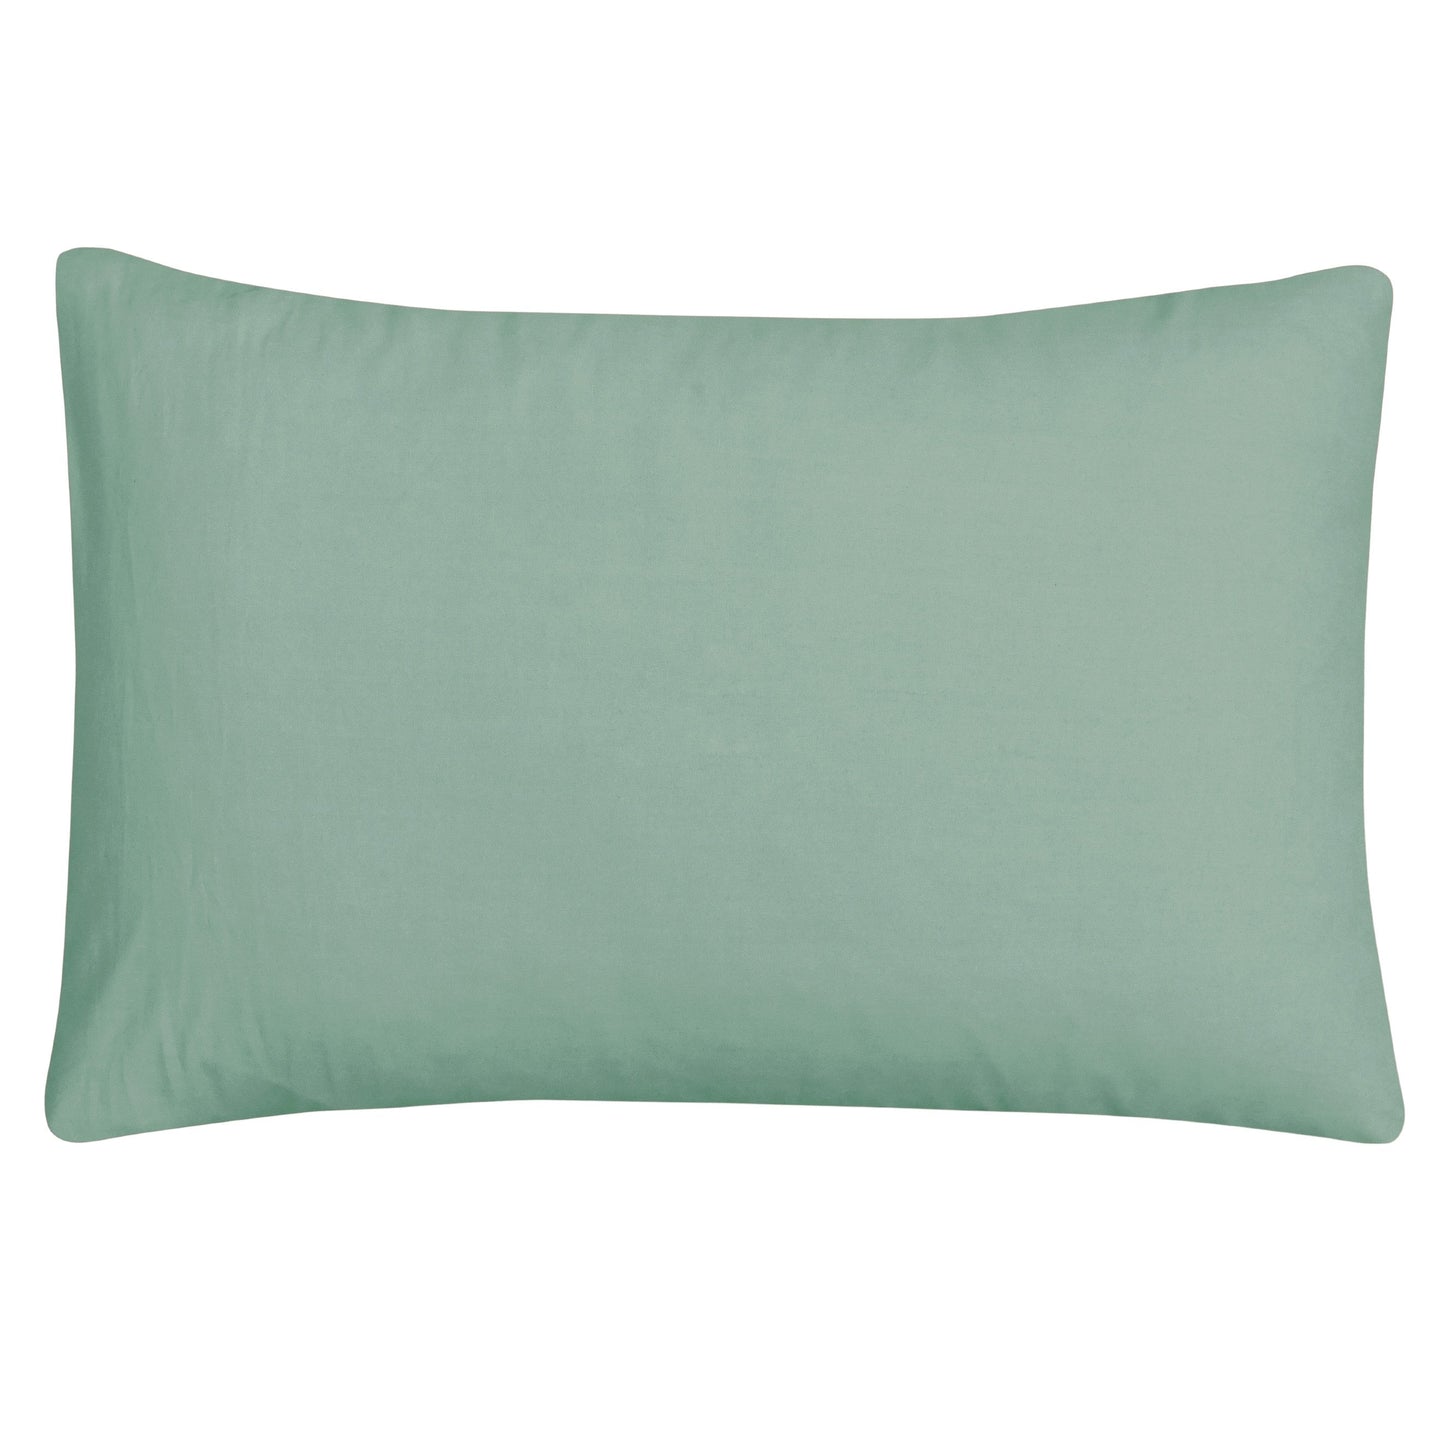 Easy Care - Pillowcase Pairs